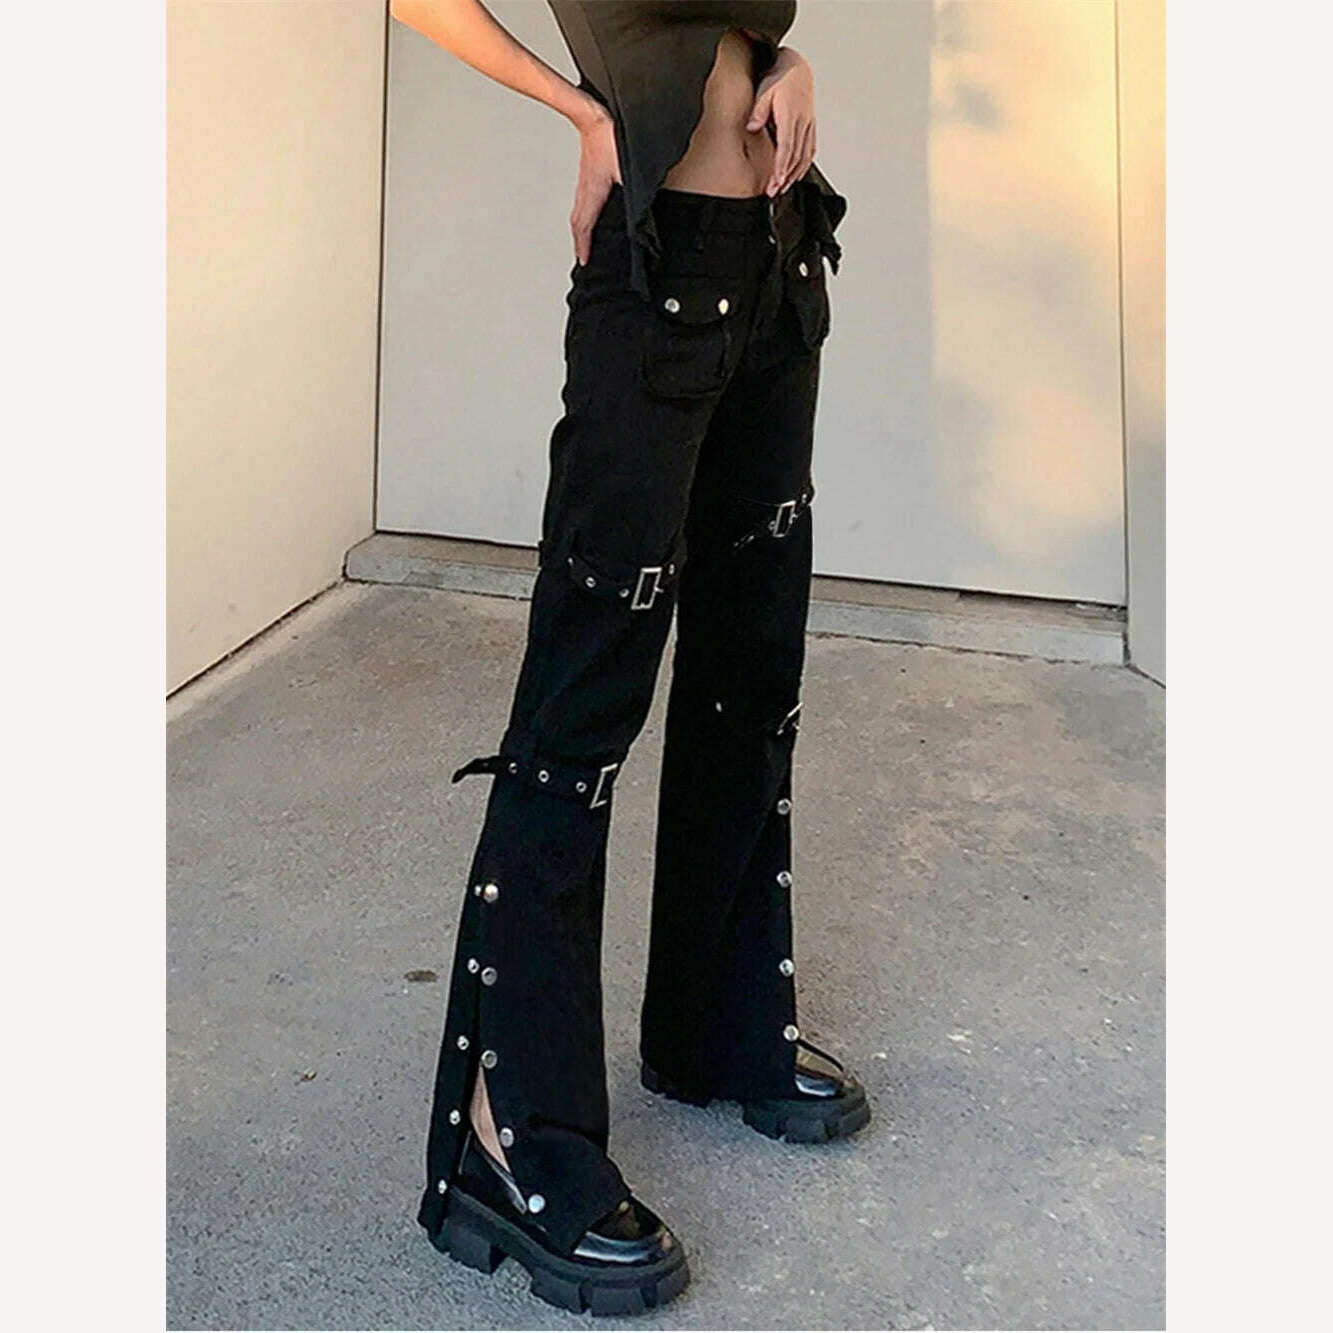 KIMLUD, Gothic Bandage Women Baggy Jeans Punk Style Egirl Black Denim Trousers Y2K Dark Academia Hight Waist Streetwear Pants, KIMLUD Women's Clothes